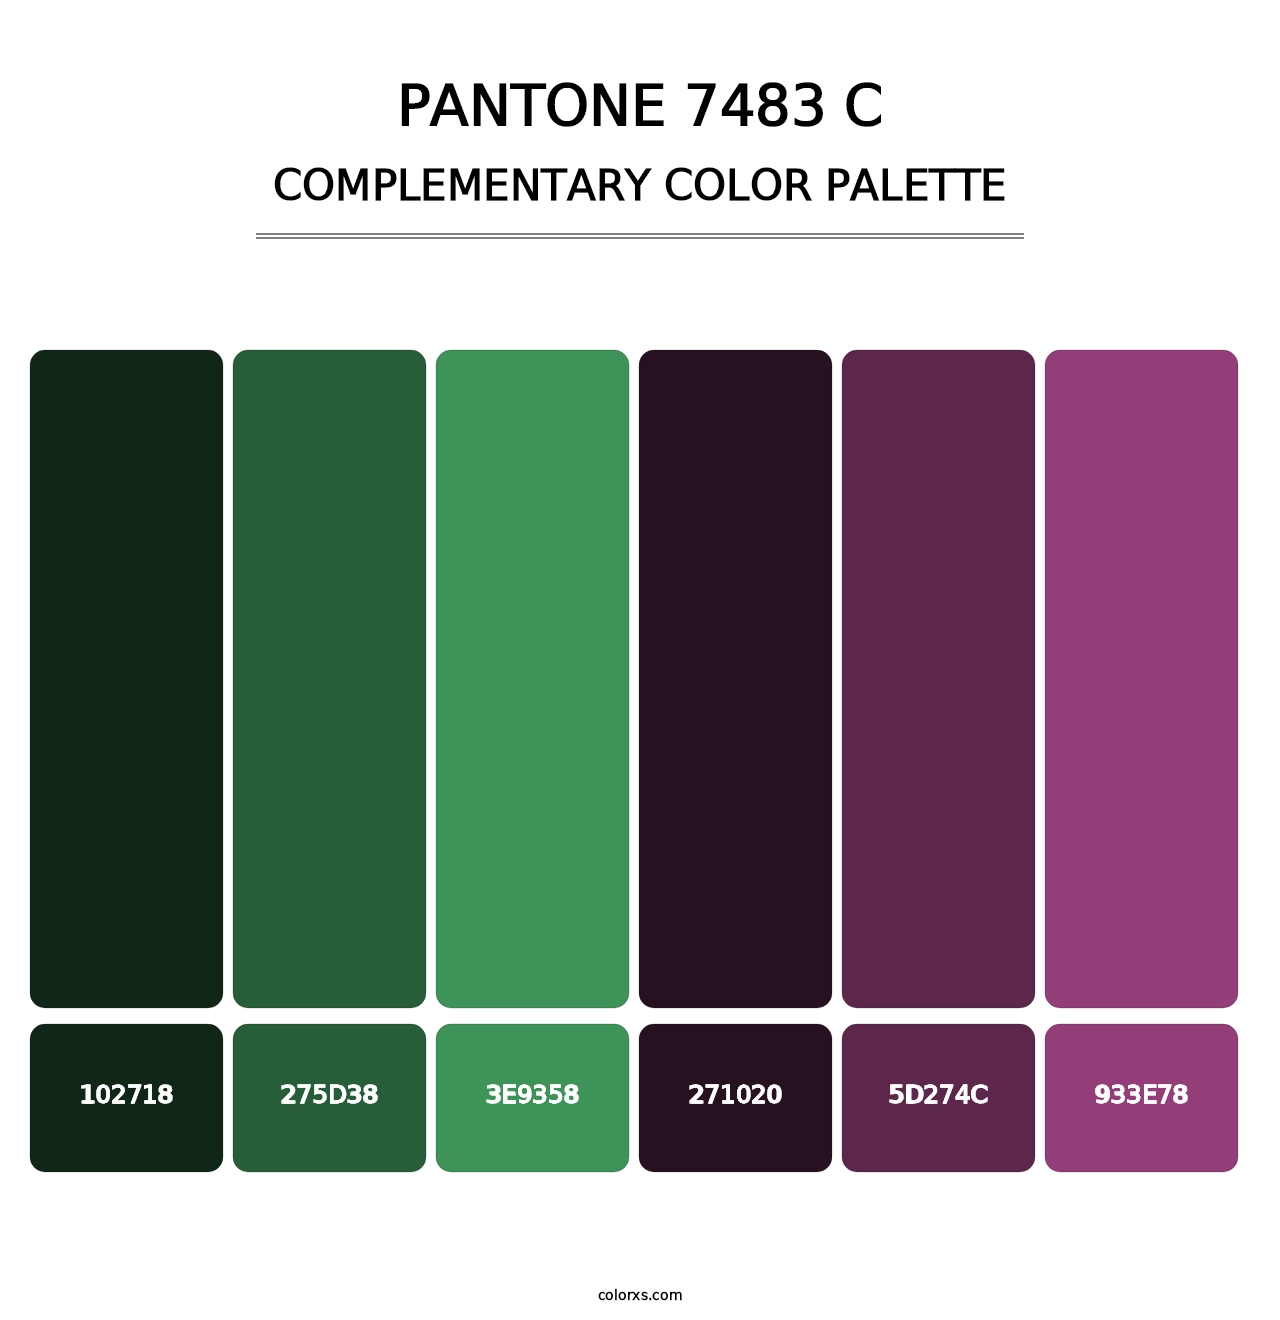 PANTONE 7483 C - Complementary Color Palette